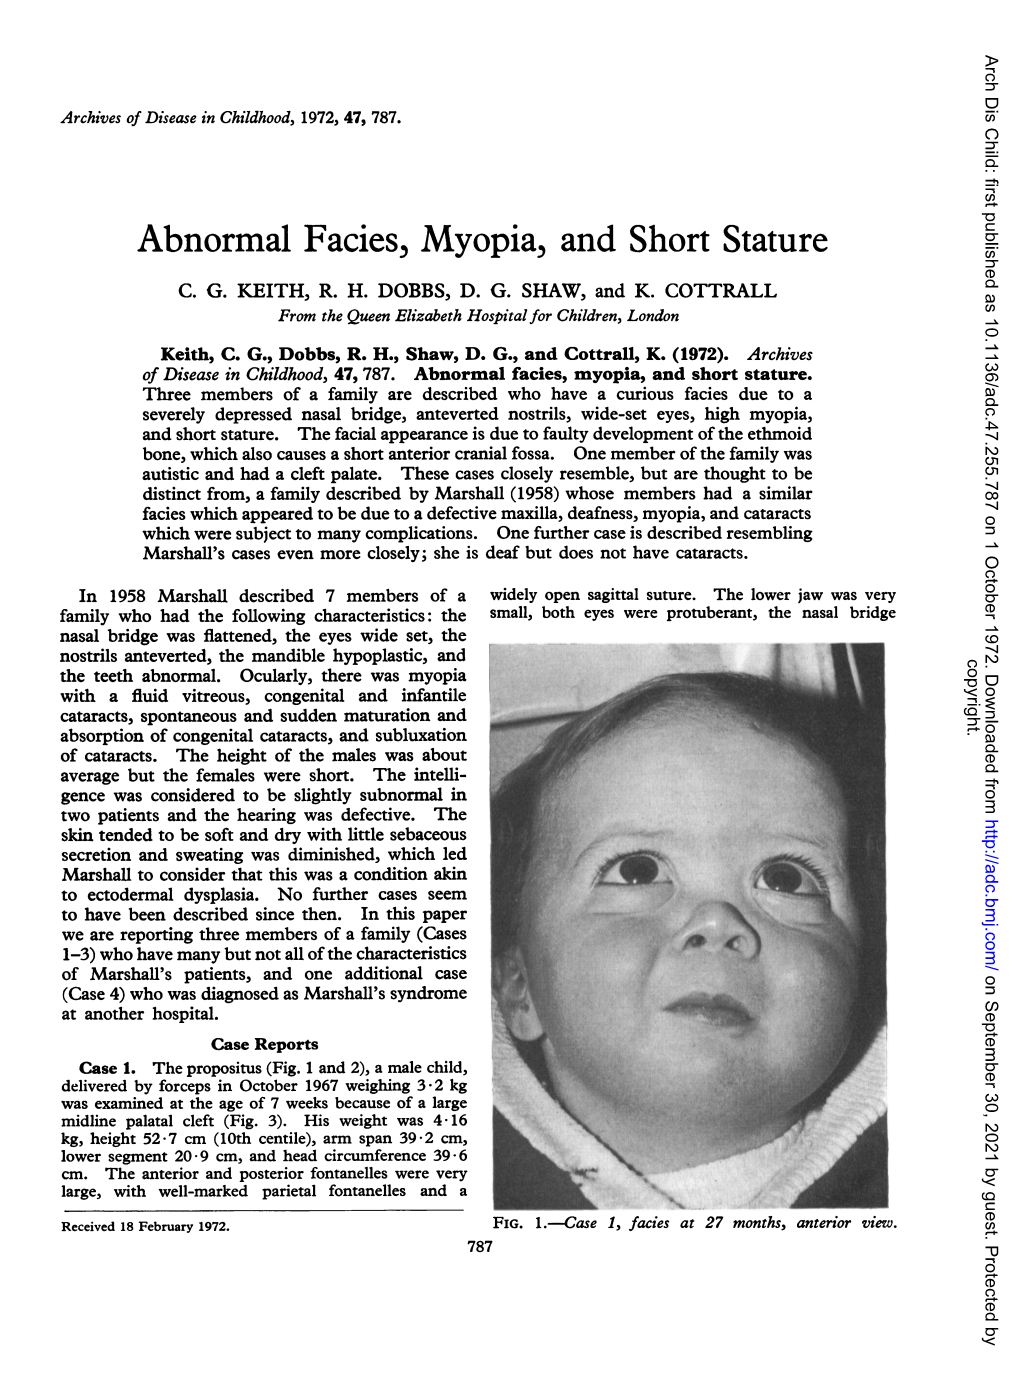 Abnormal Facies, Myopia, Andshort Stature